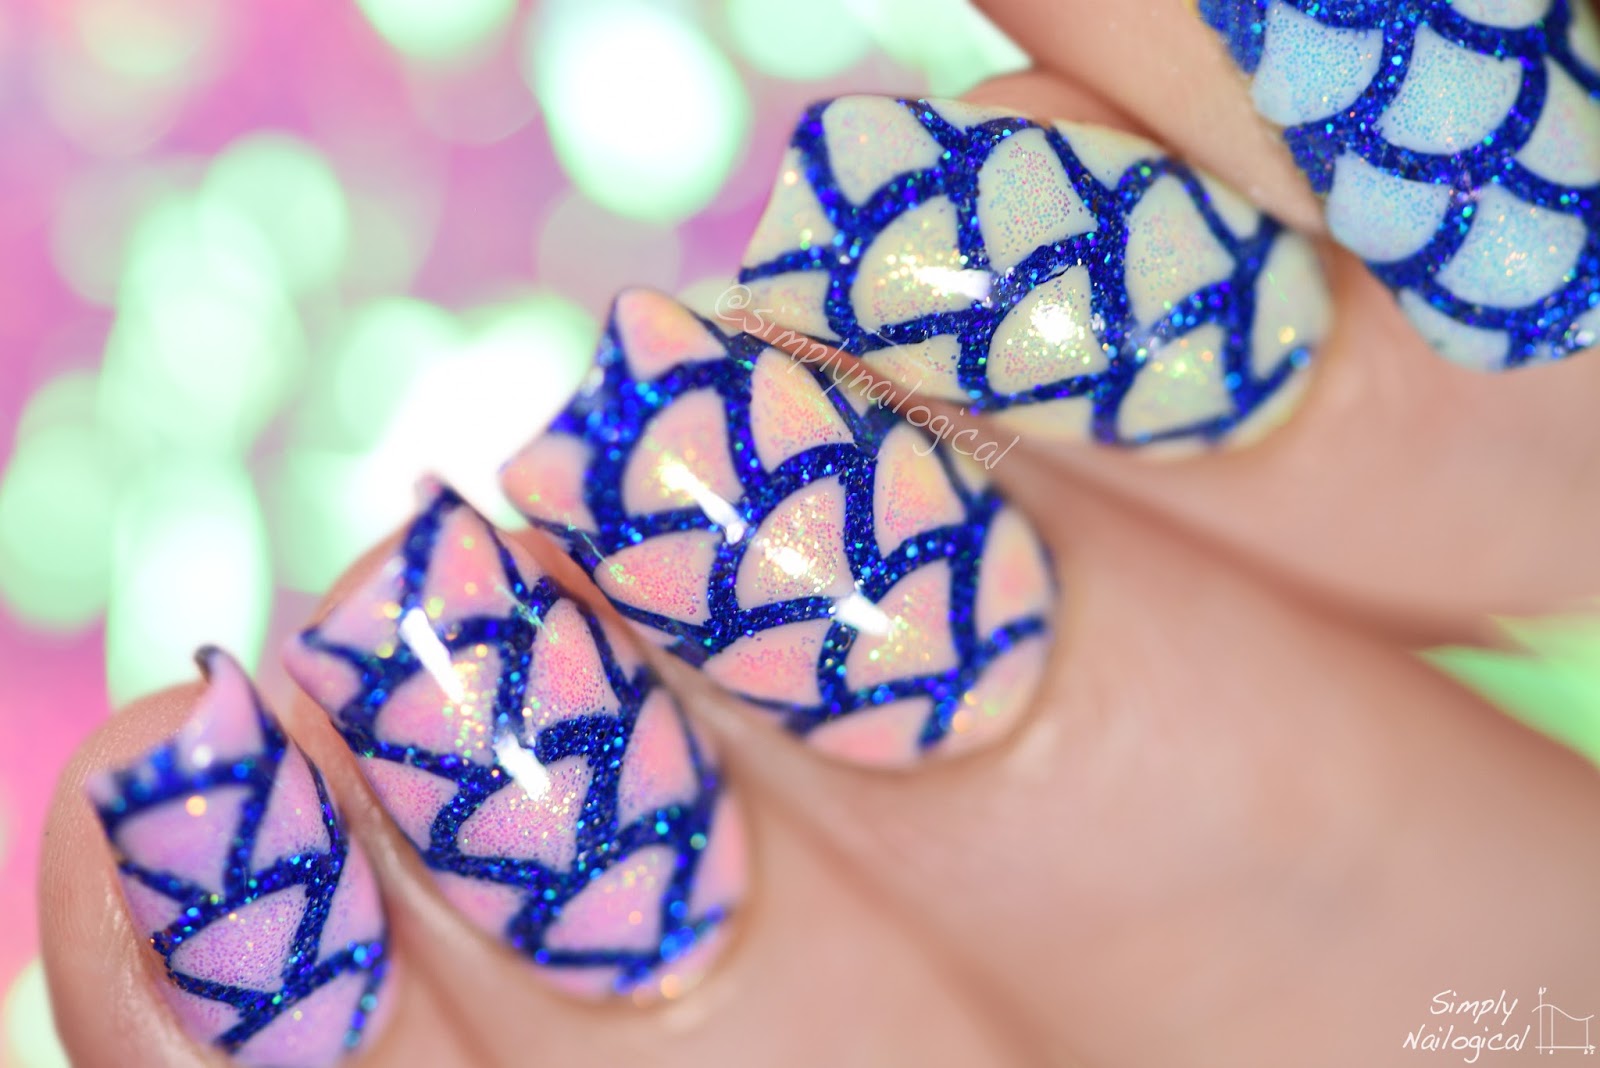 Simply Nailogical: Mermaid glow nails using mermaid effect powder